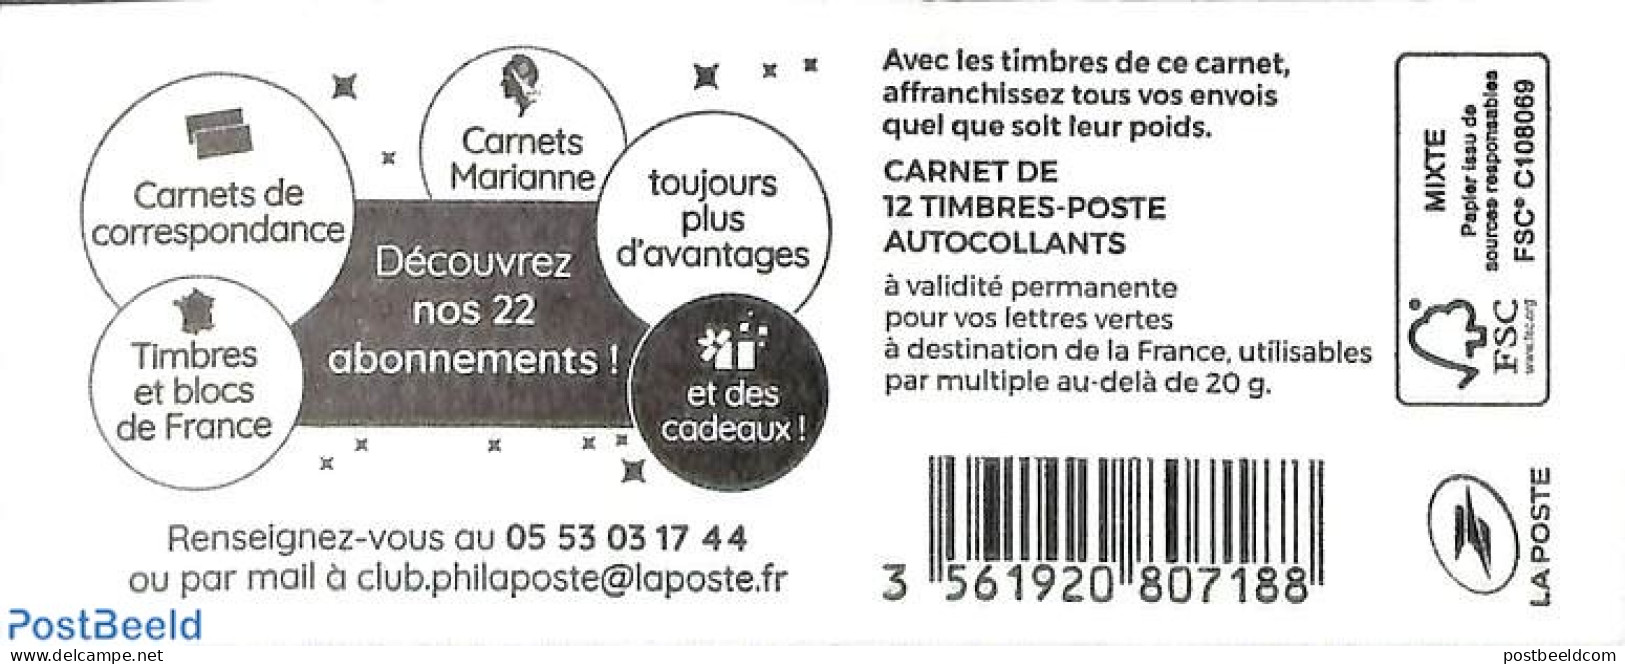 France 2018 Definitives Booklet, Mint NH, Stamp Booklets - Neufs